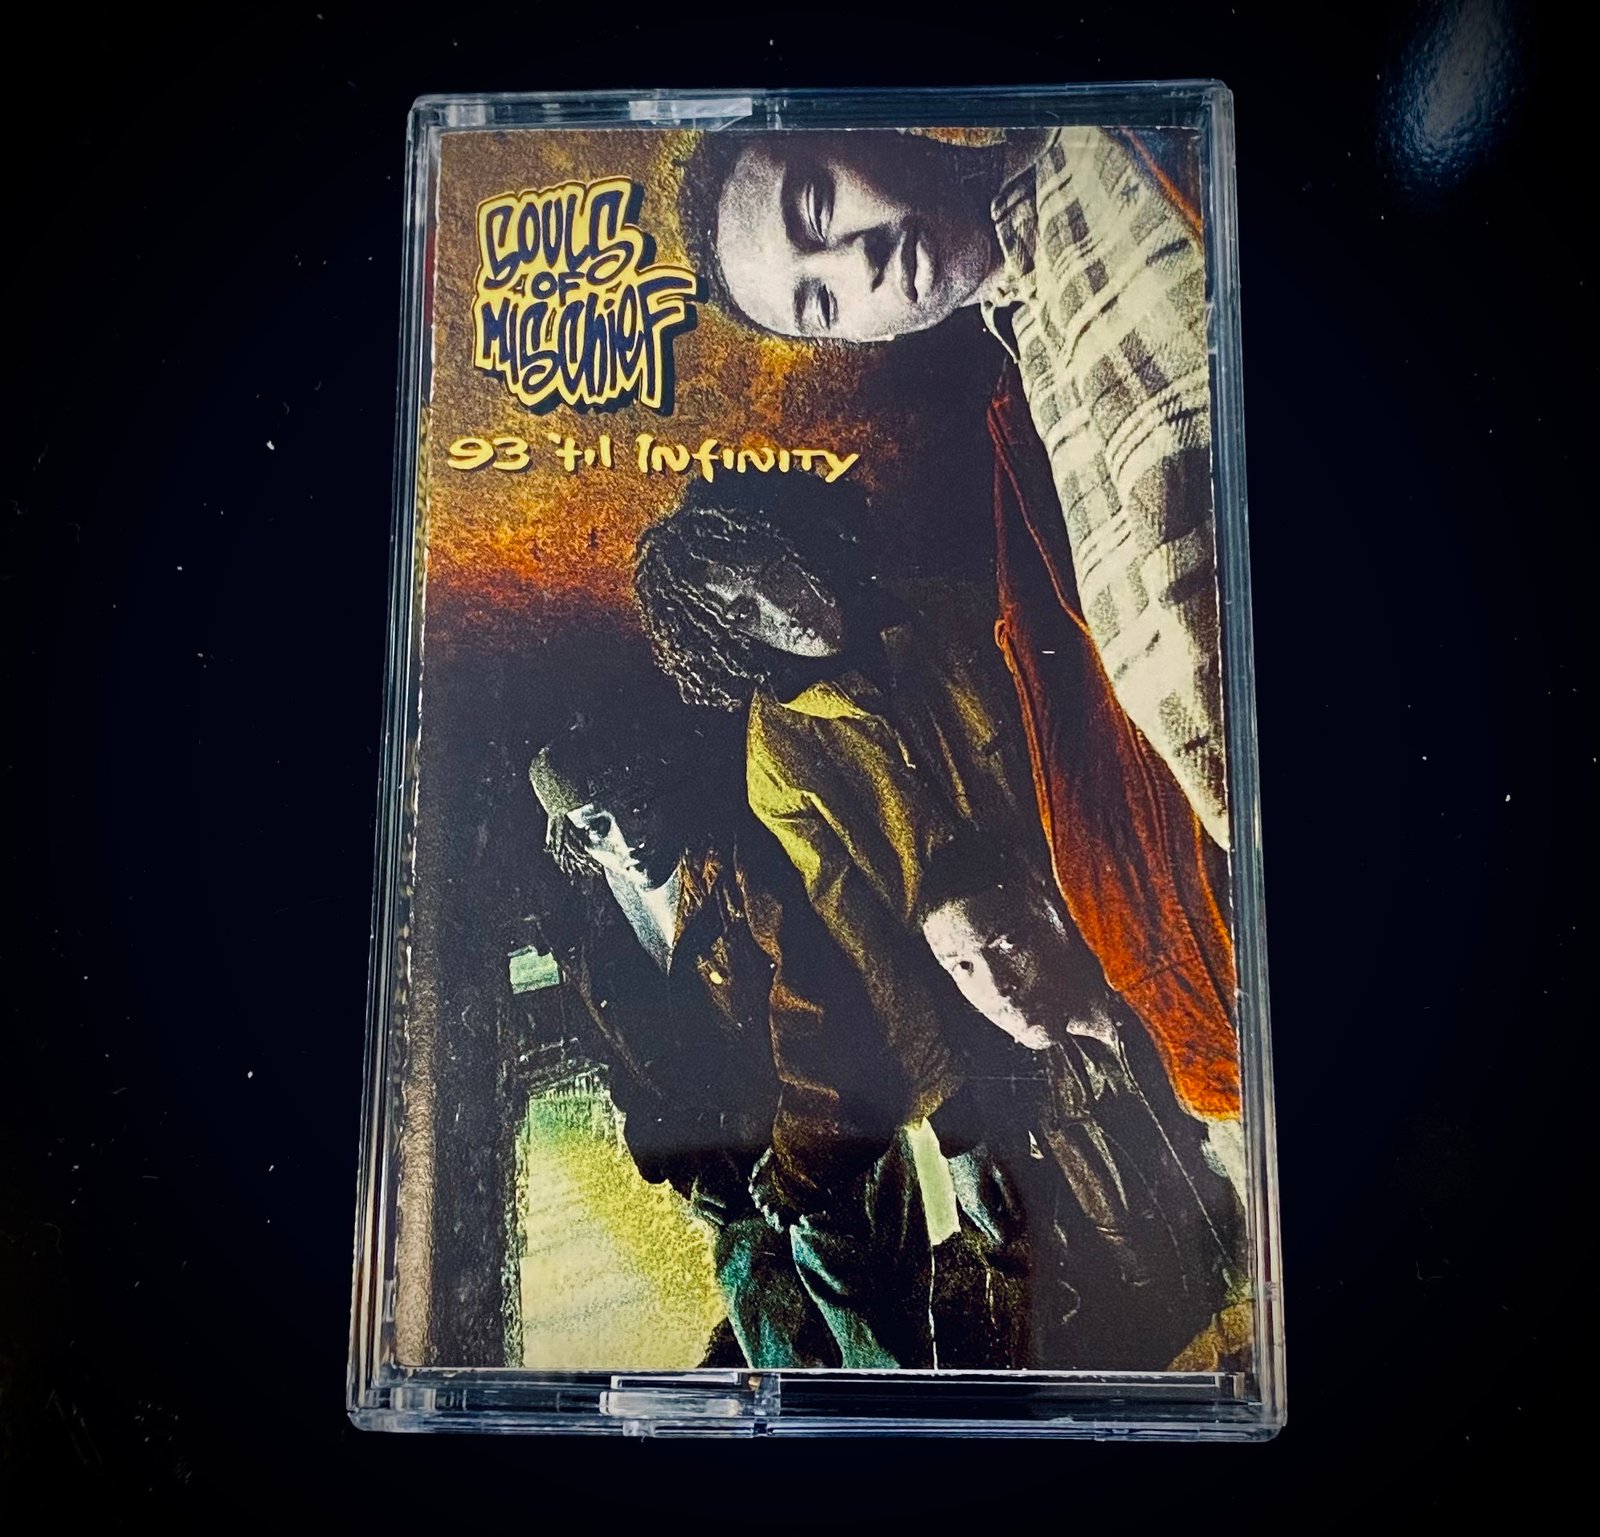 Souls of mischief “93' til infinity” | Throwdown Records